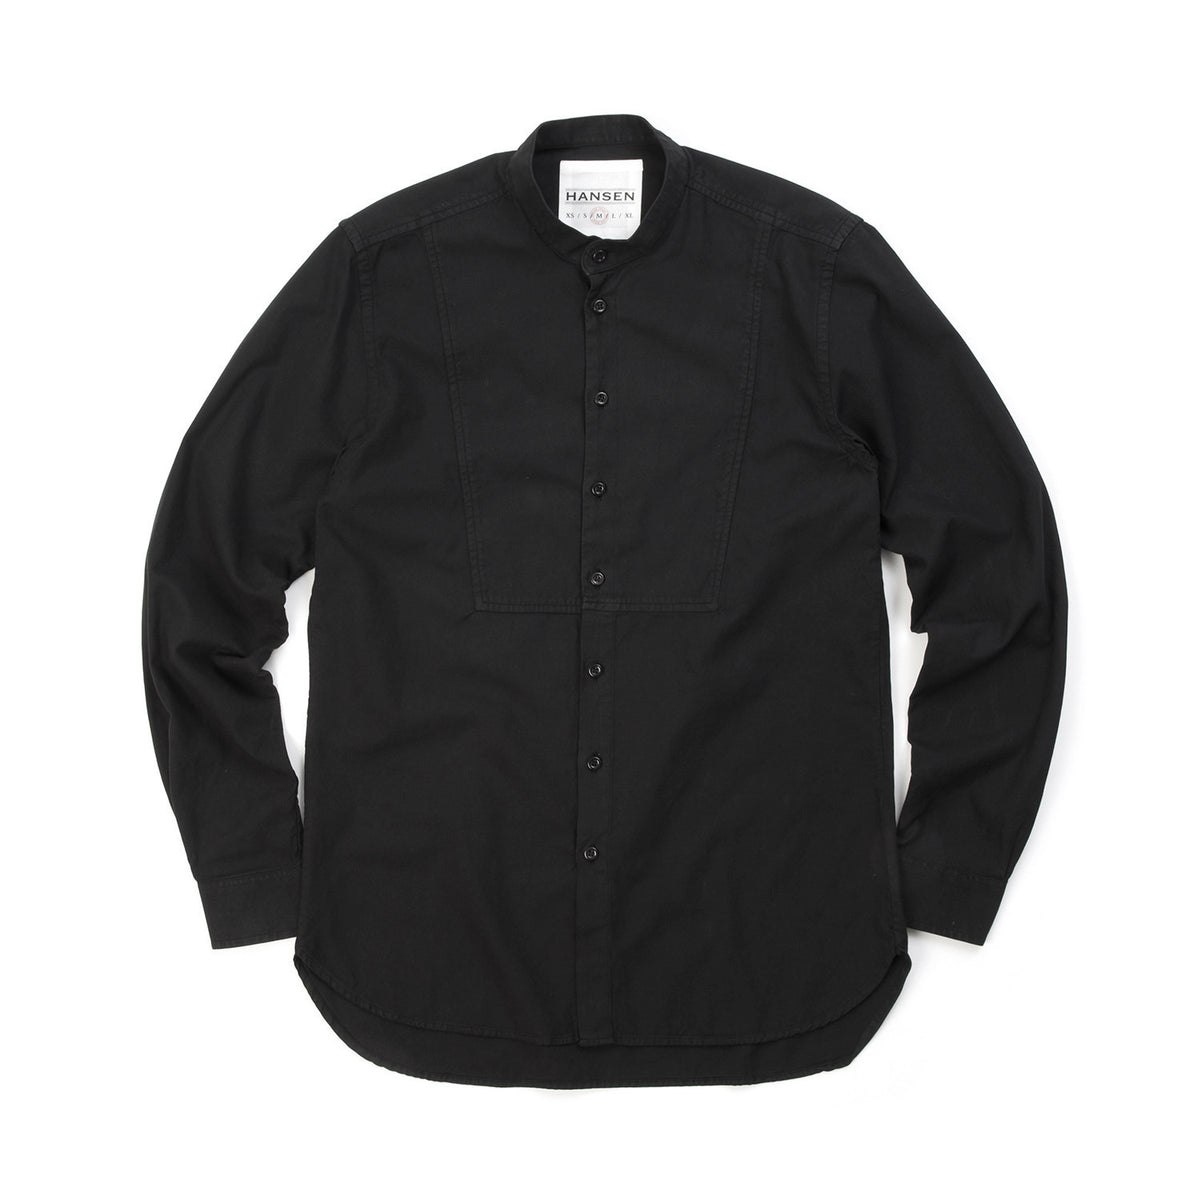 Hansen | 'Valmar' Collarless Bib Shirt Black - Concrete